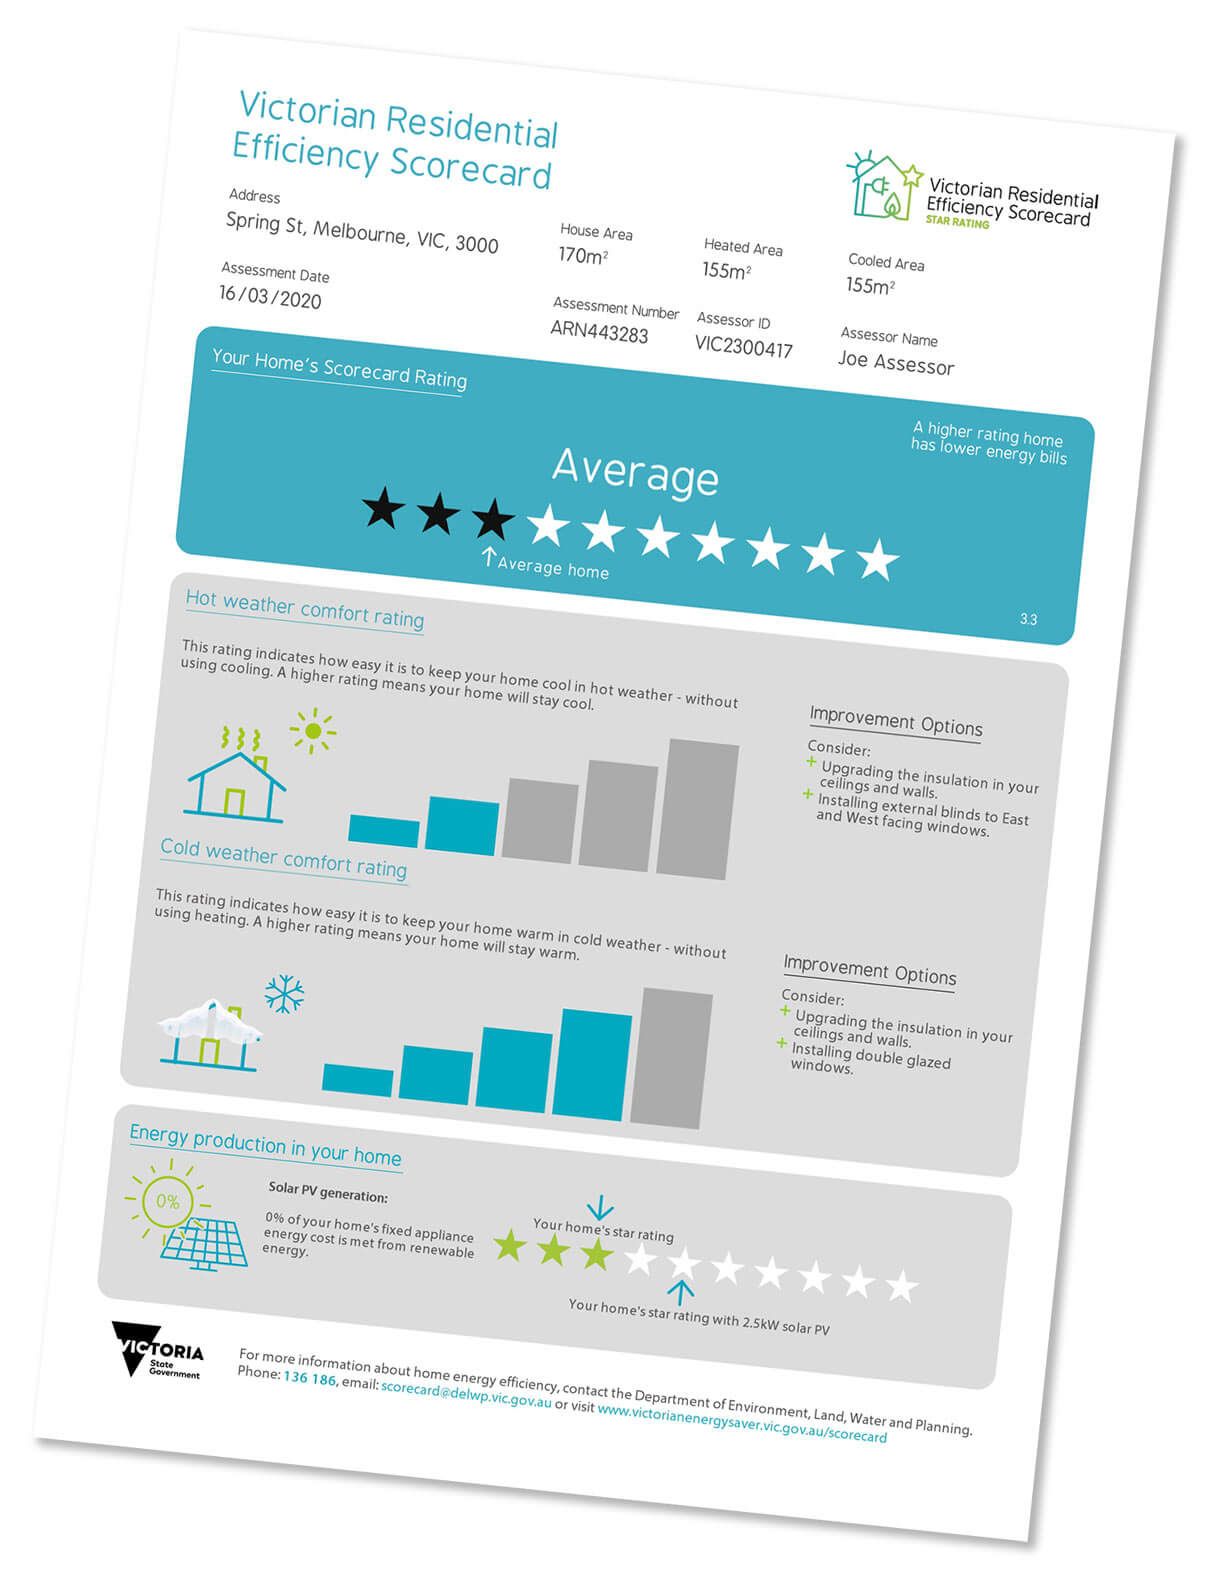 Victorian Residential Efficiency Scorecard